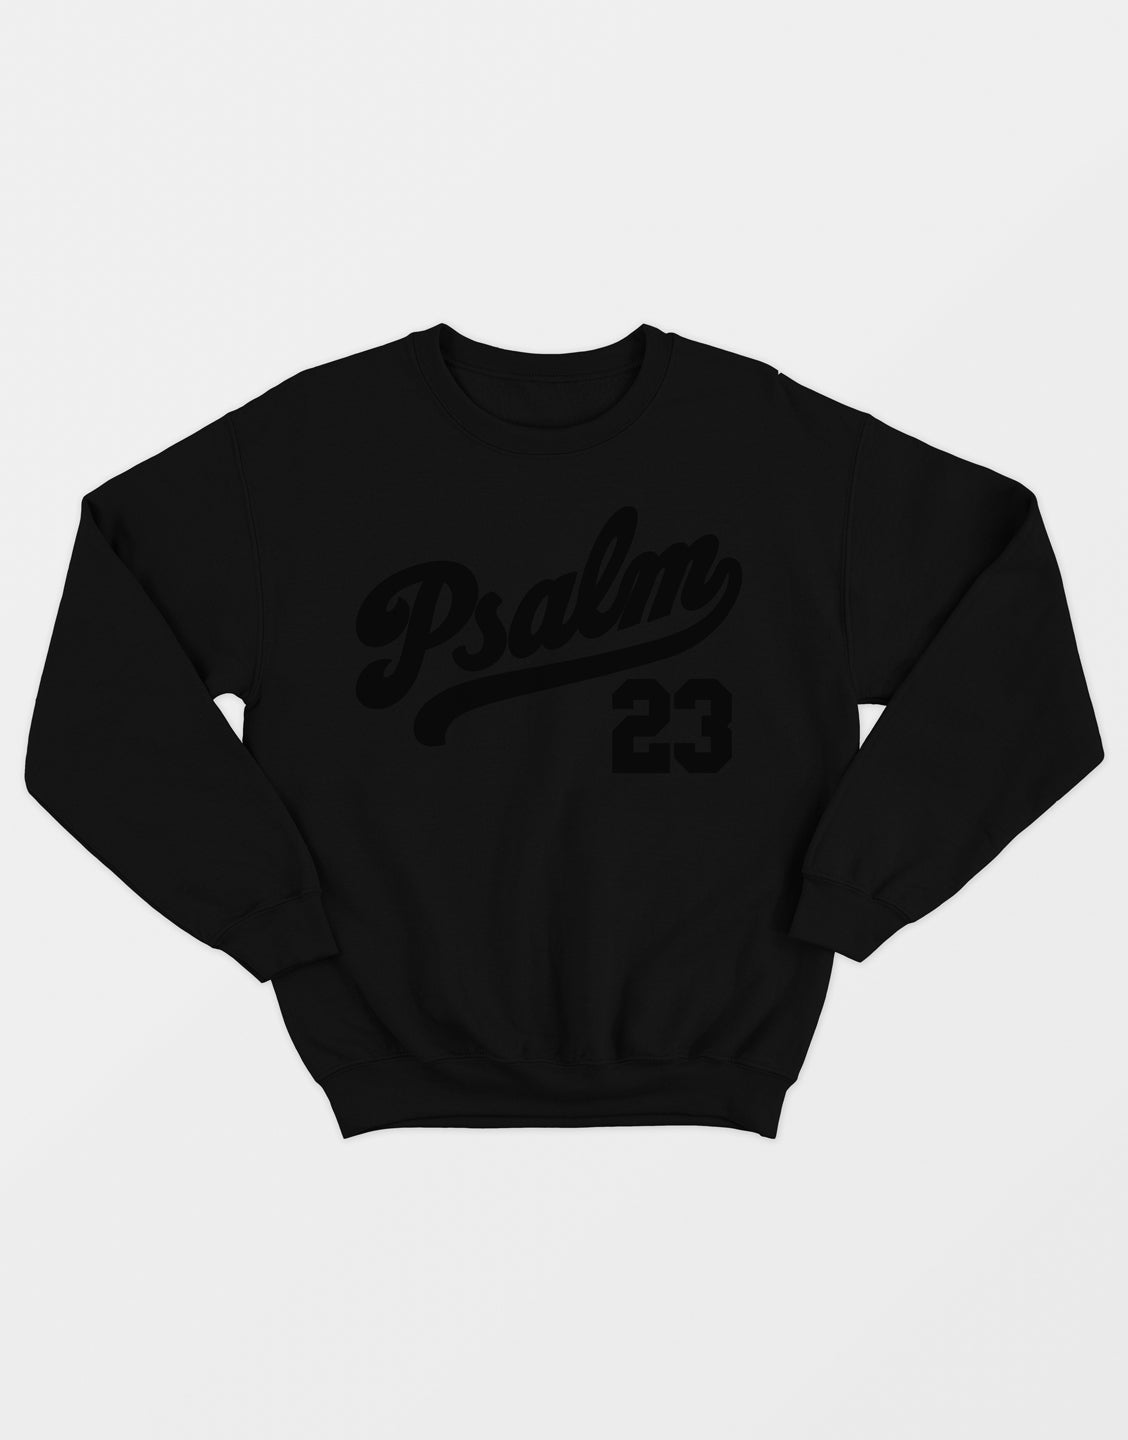 Psalm 23 Sweatshirt - Black Trio